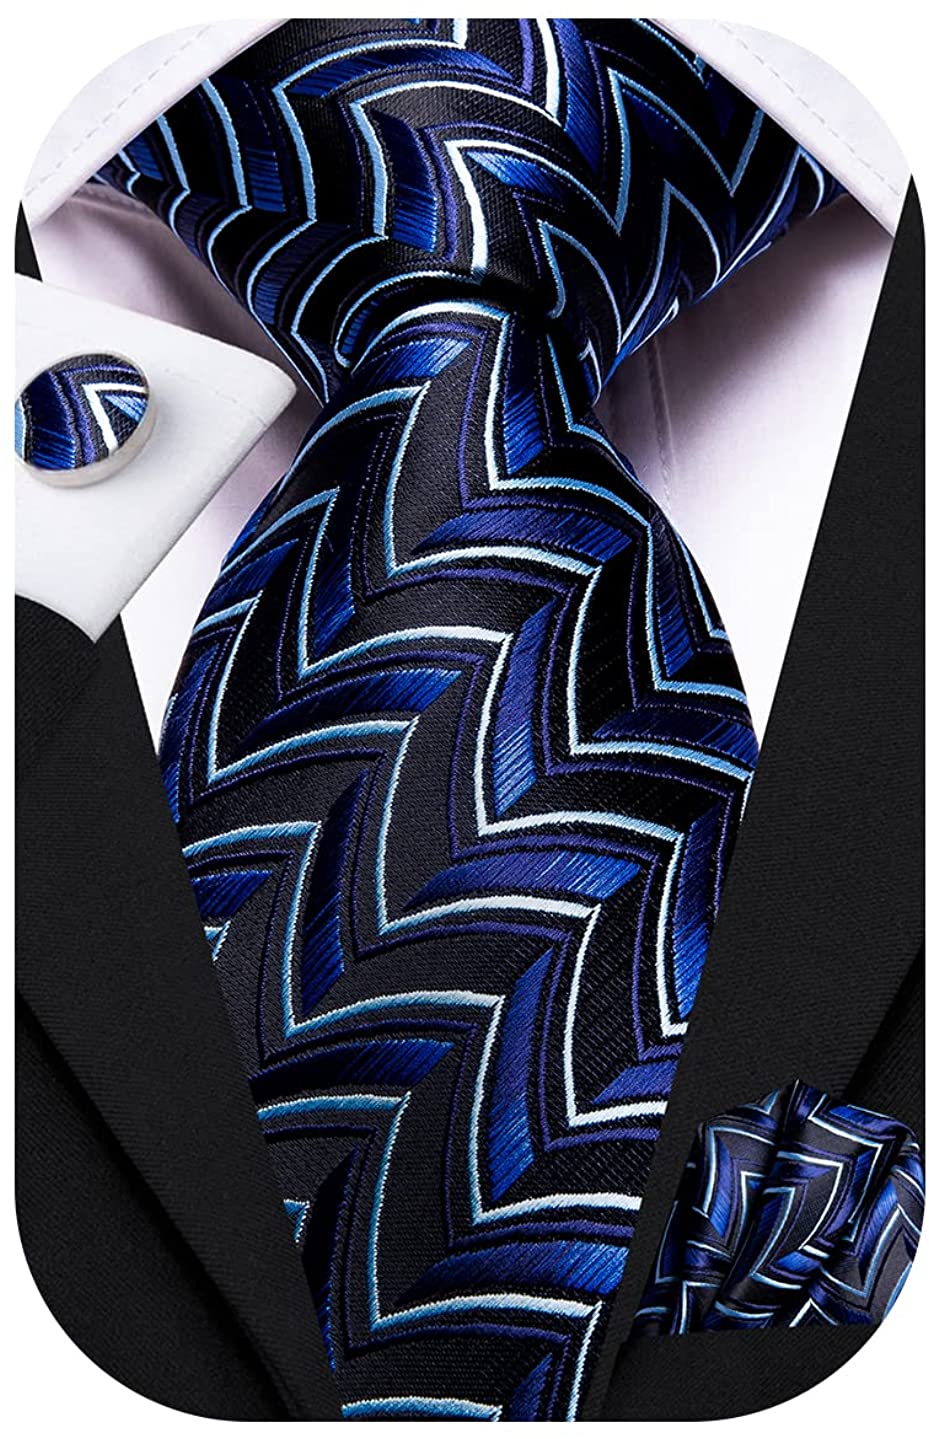 Dubulle Mens Ties Set Woven Paisley Stripes Necktie Handkerchief Cufflinks Wedding Business Tie